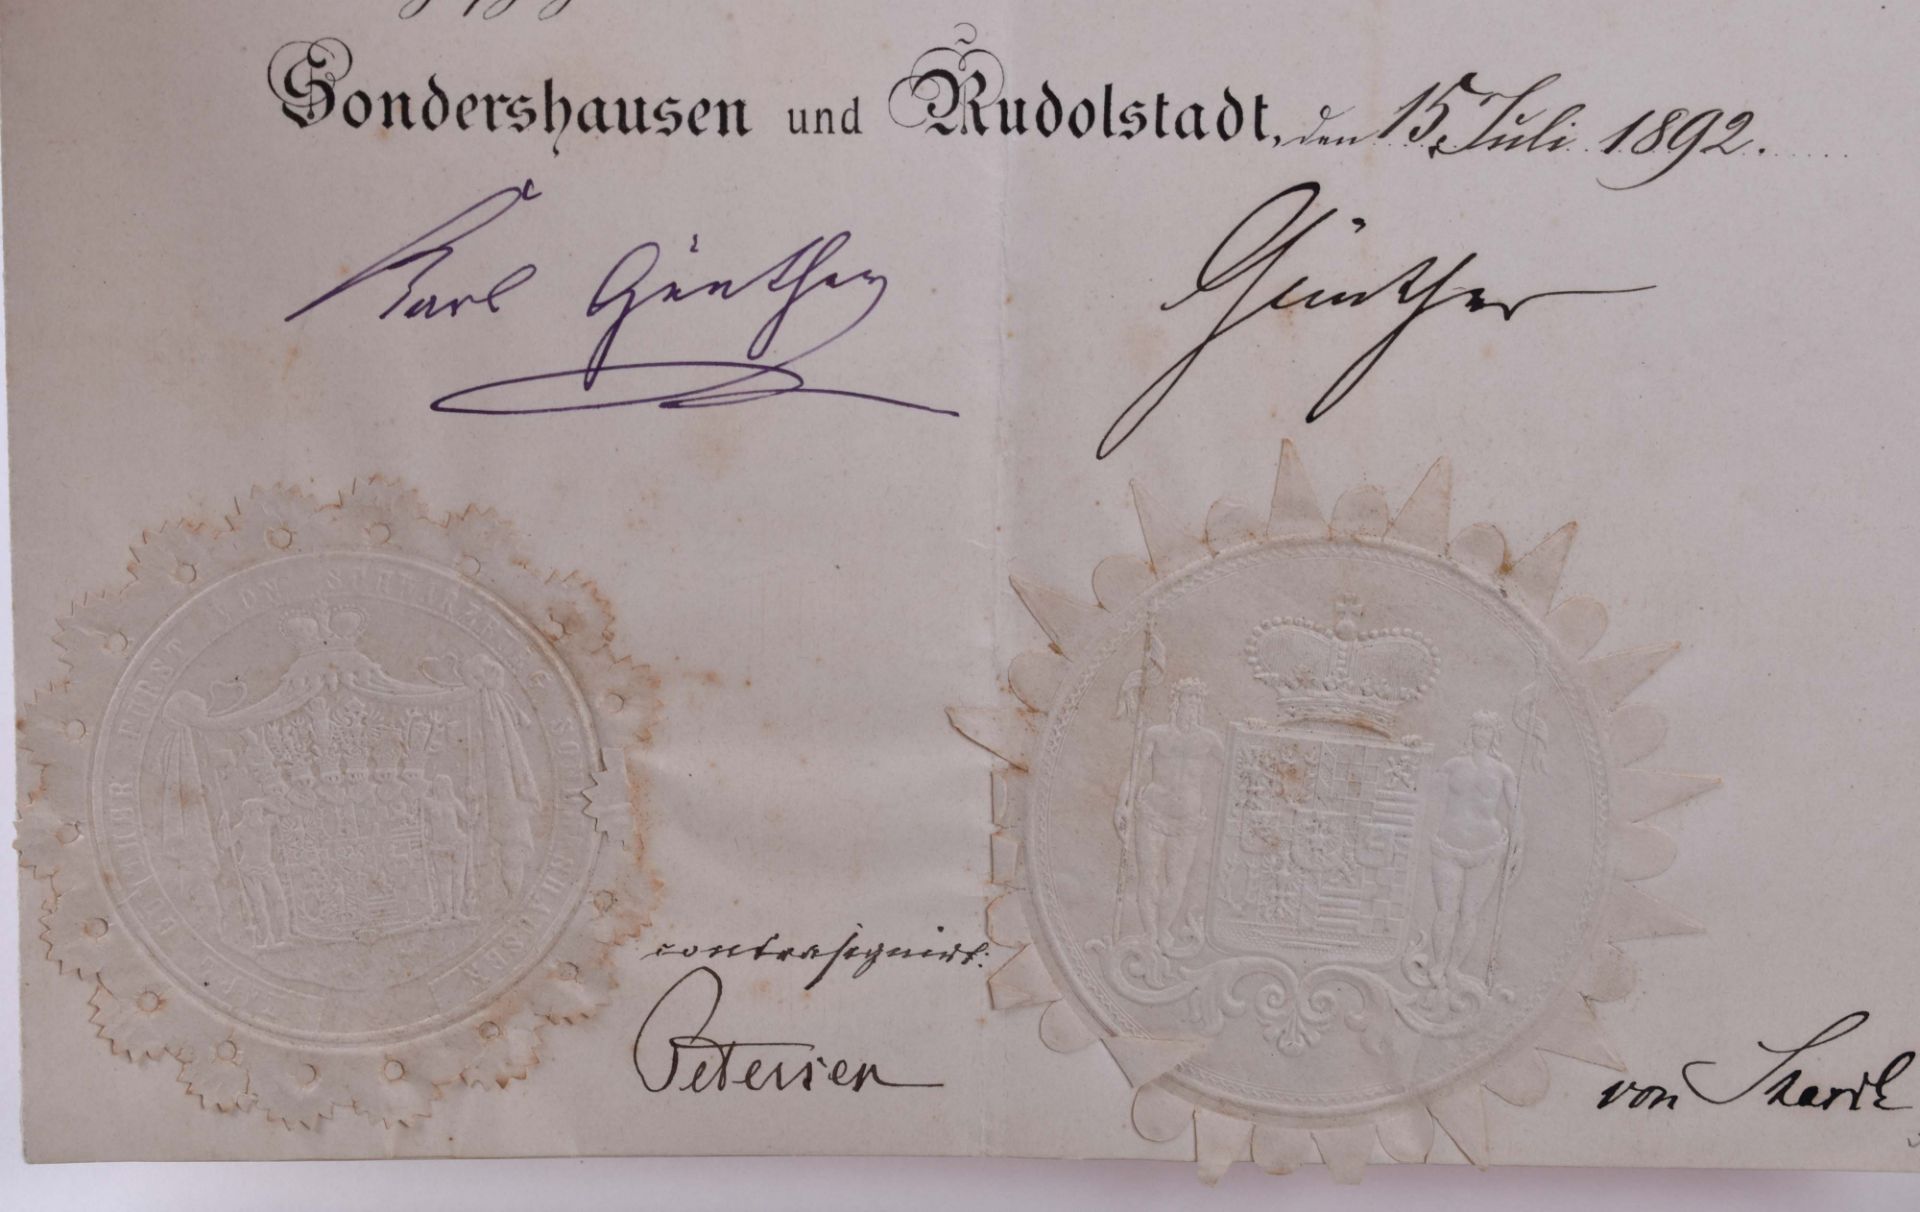 Verleihungsurkunde Ehrenkreuz I. Klasse vom 15.07.1892Verleihungsurkunde Ehrenkreuz 1. Klasse für - Bild 2 aus 2